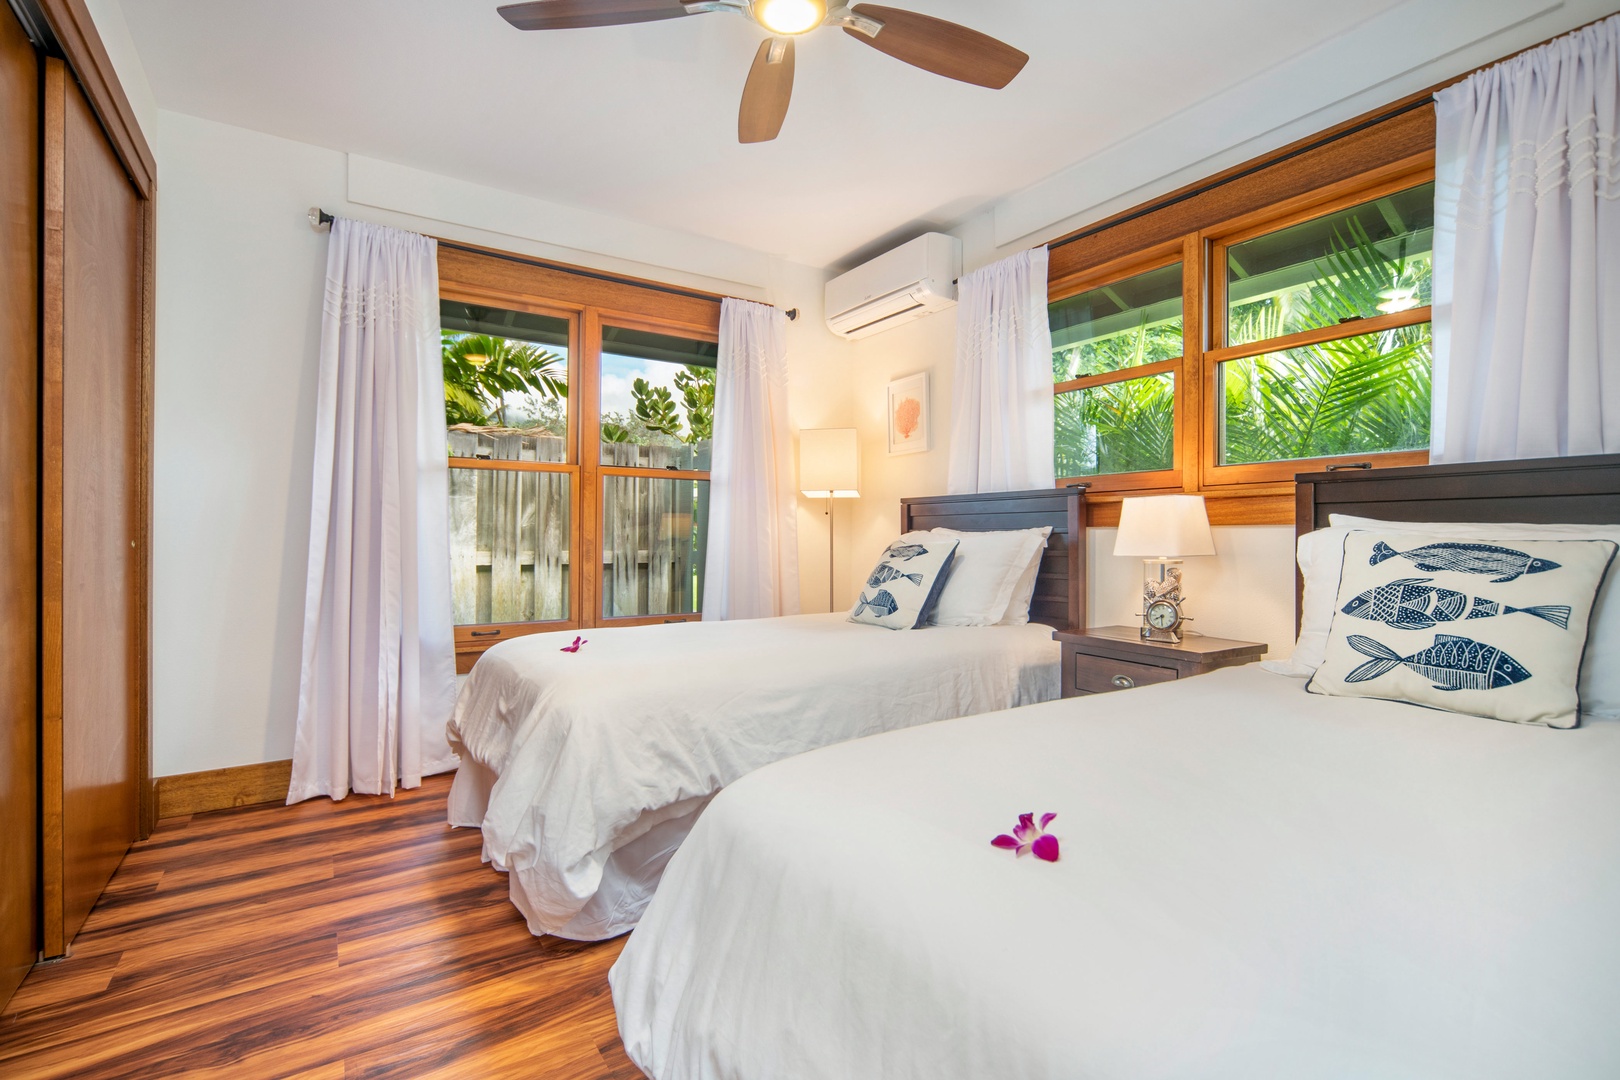 Honolulu Vacation Rentals, Hale Niuiki - Twin bedroom, convertible to king bed.